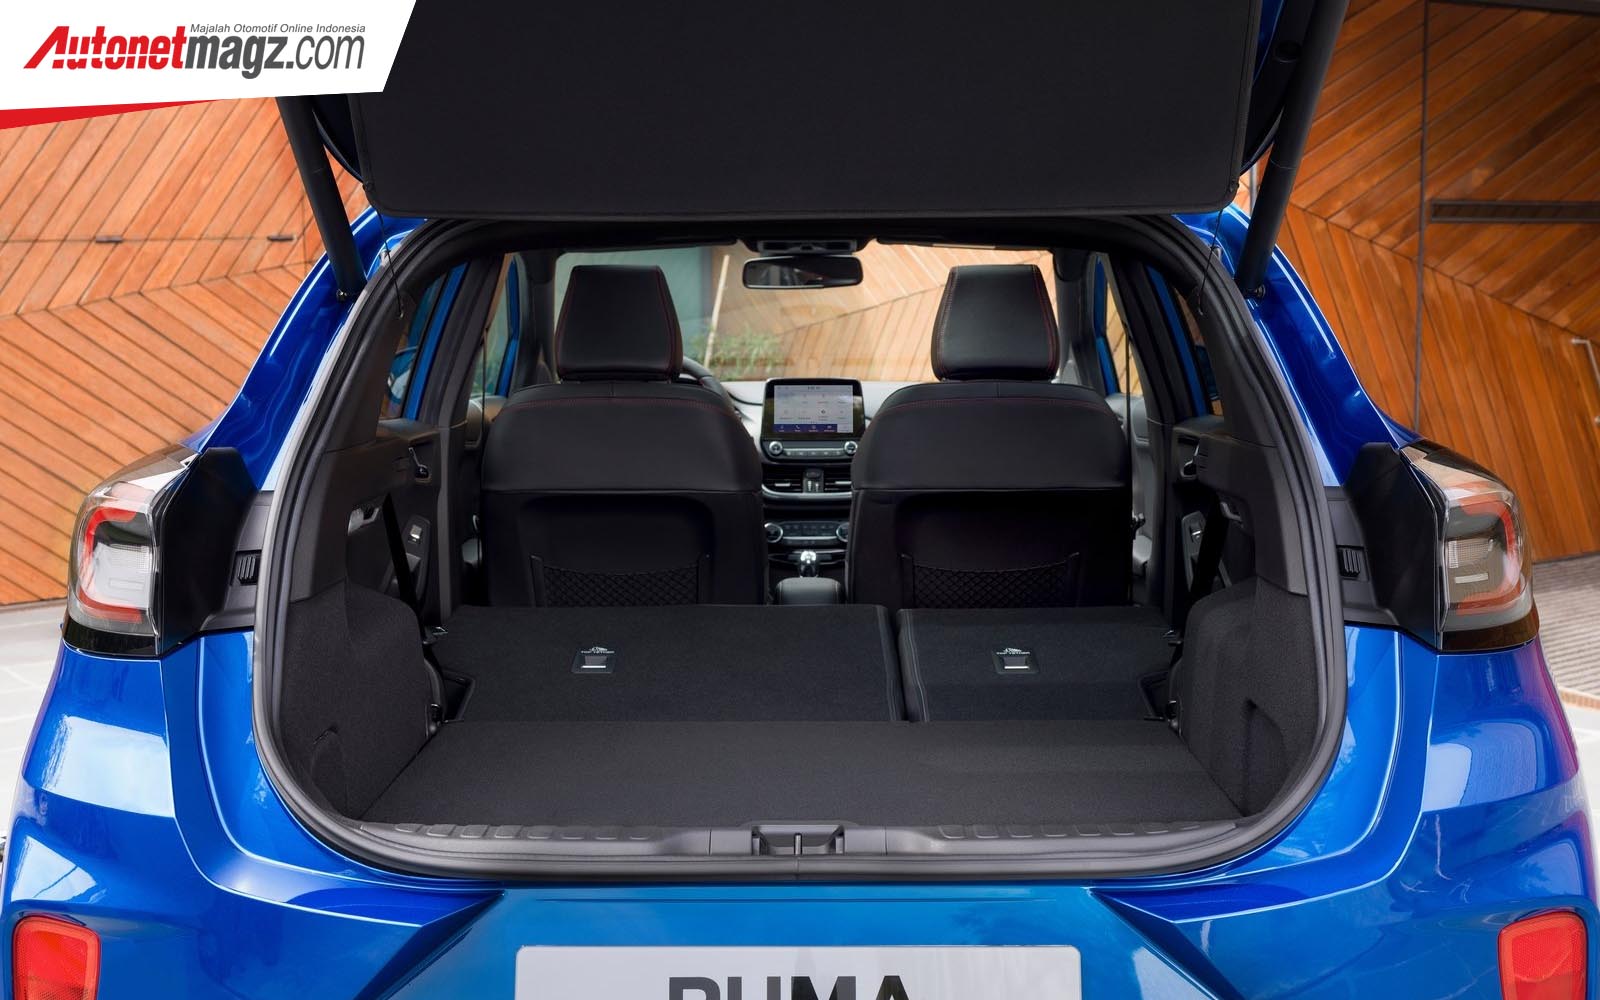 Berita, Kabin Ford Puma 2020: Ford Puma 2020 : CUV Unyu Dengan Mesin 152 hp & Transmisi Manual 6 Speed!